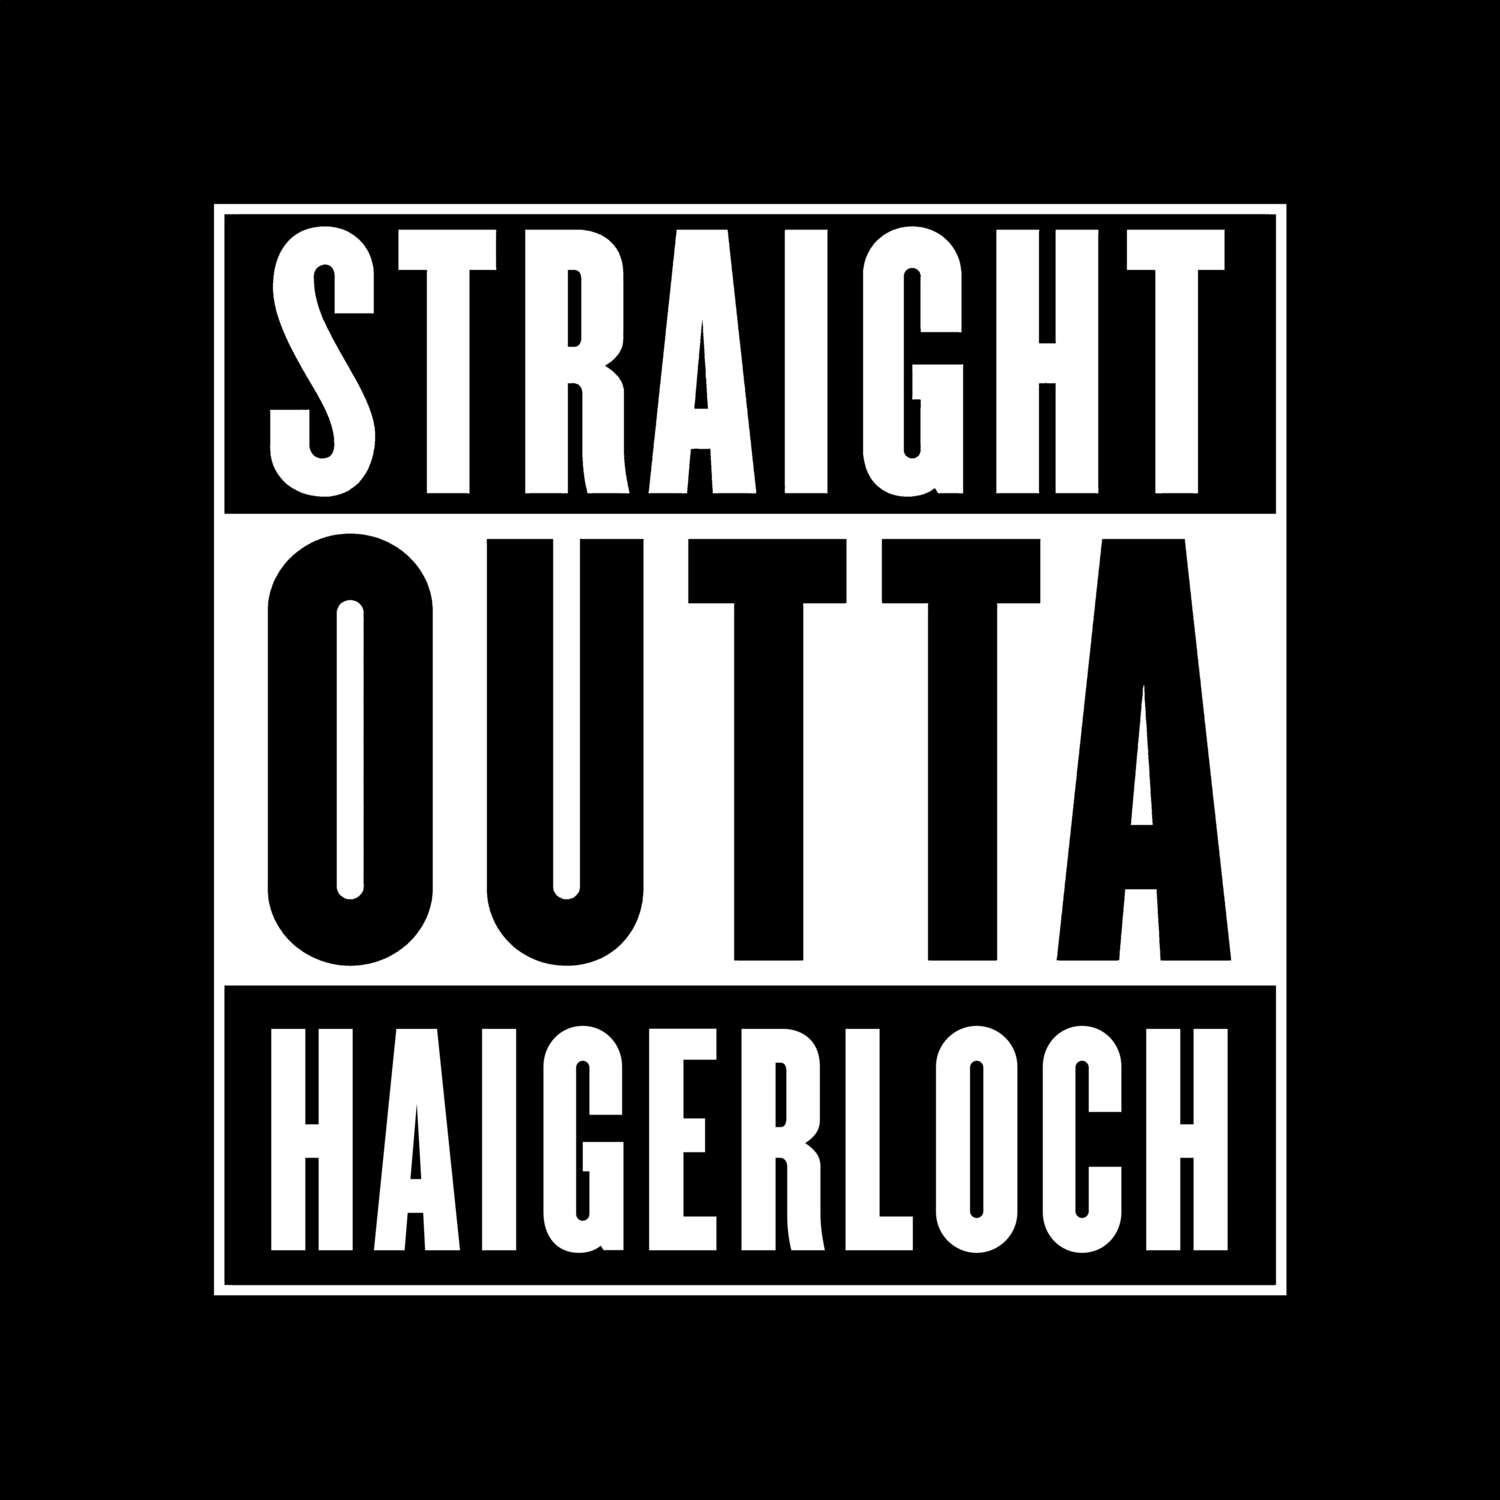 Haigerloch T-Shirt »Straight Outta«